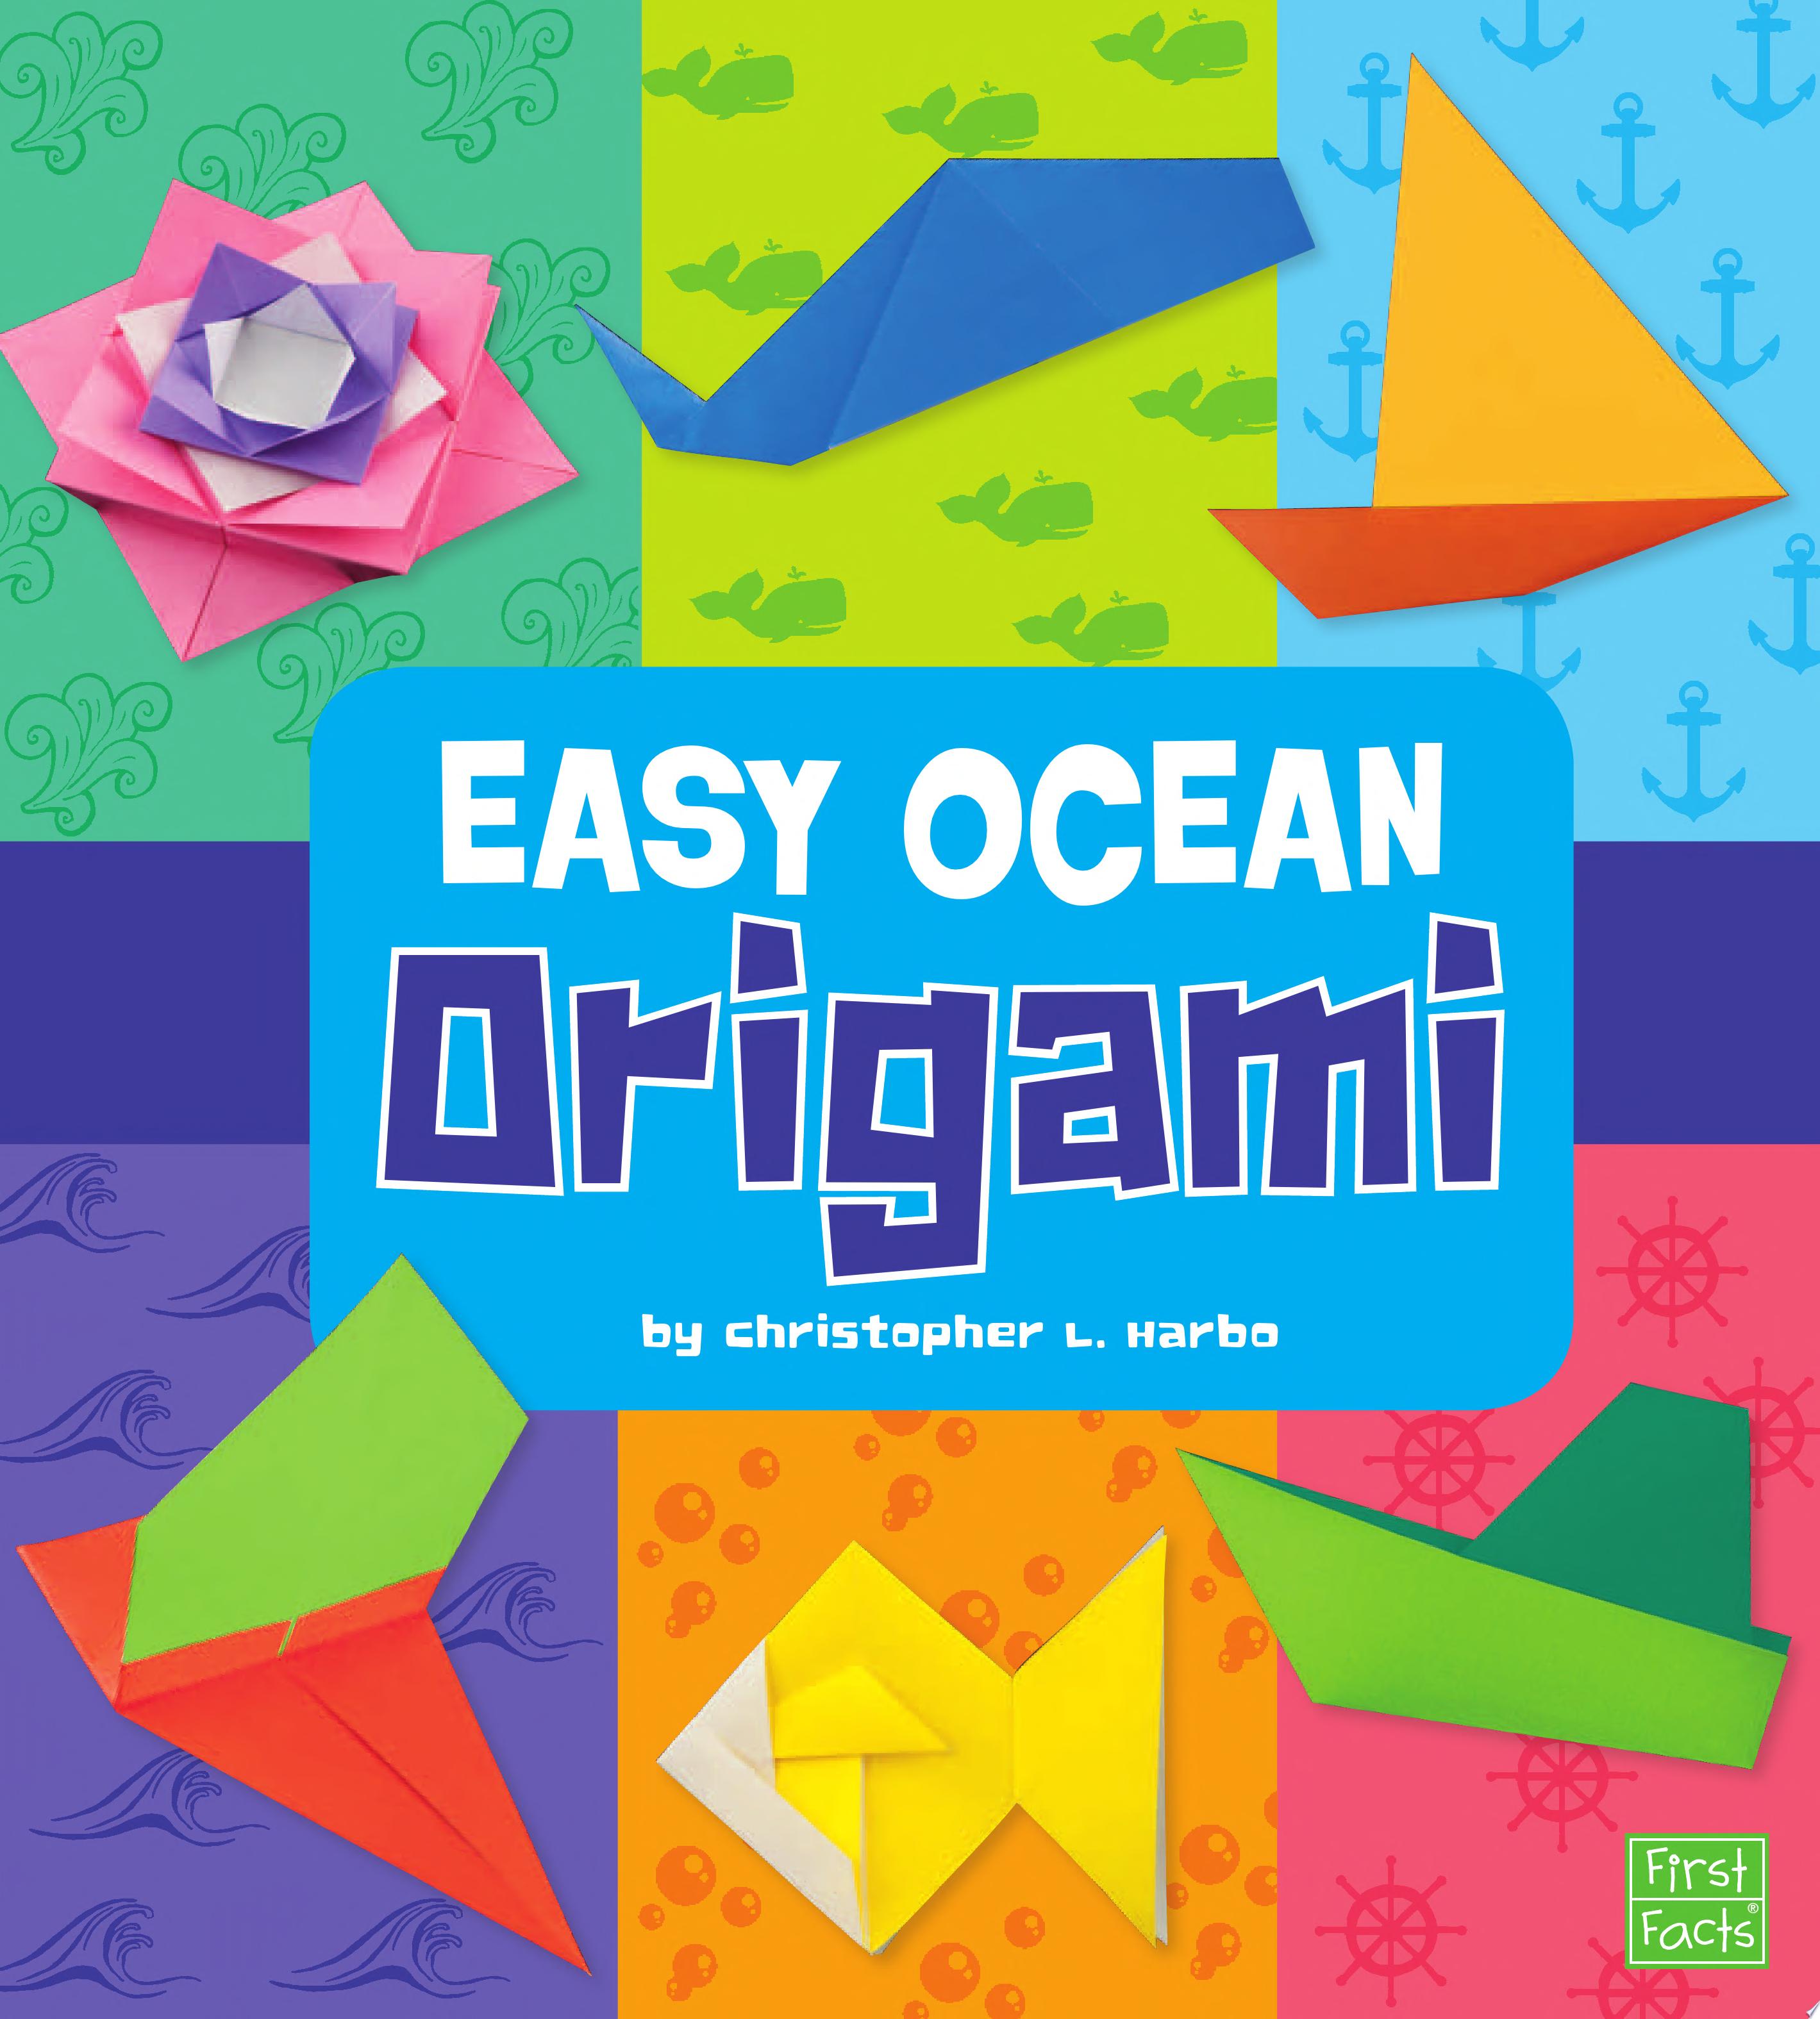 Image for "Easy Ocean Origami"